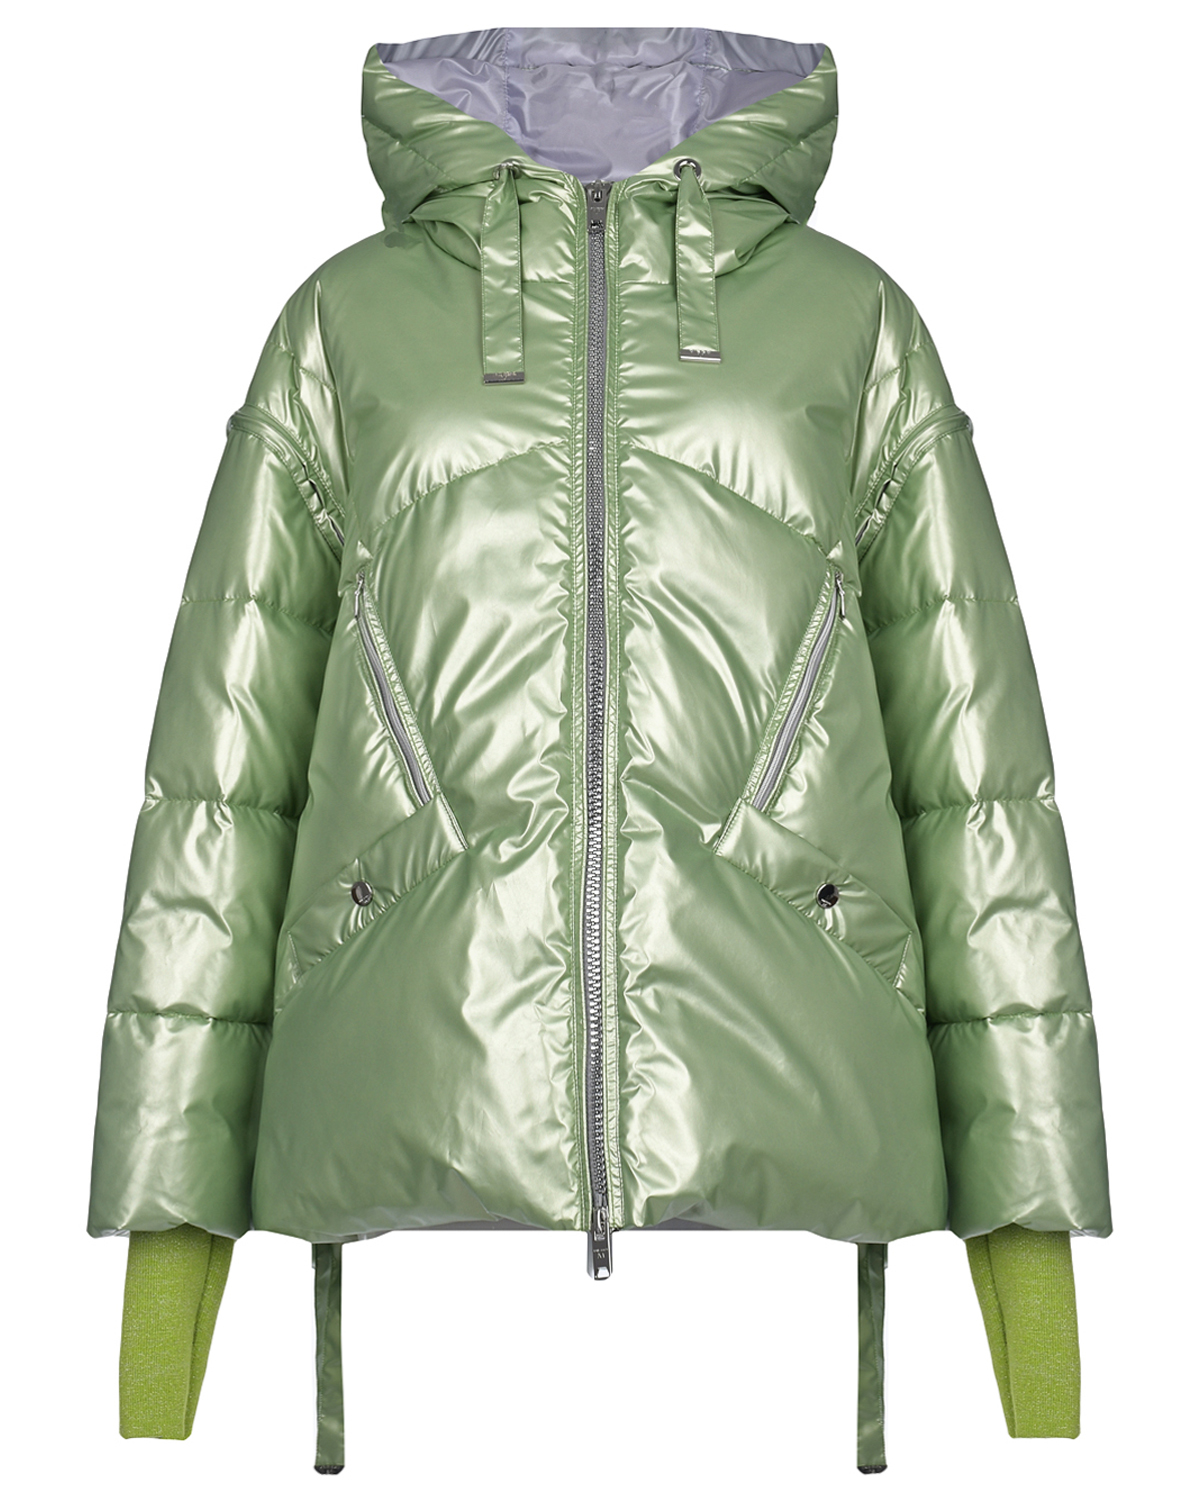 Зеленая куртка со съемными рукавами Diego M, размер 44, цвет зеленый